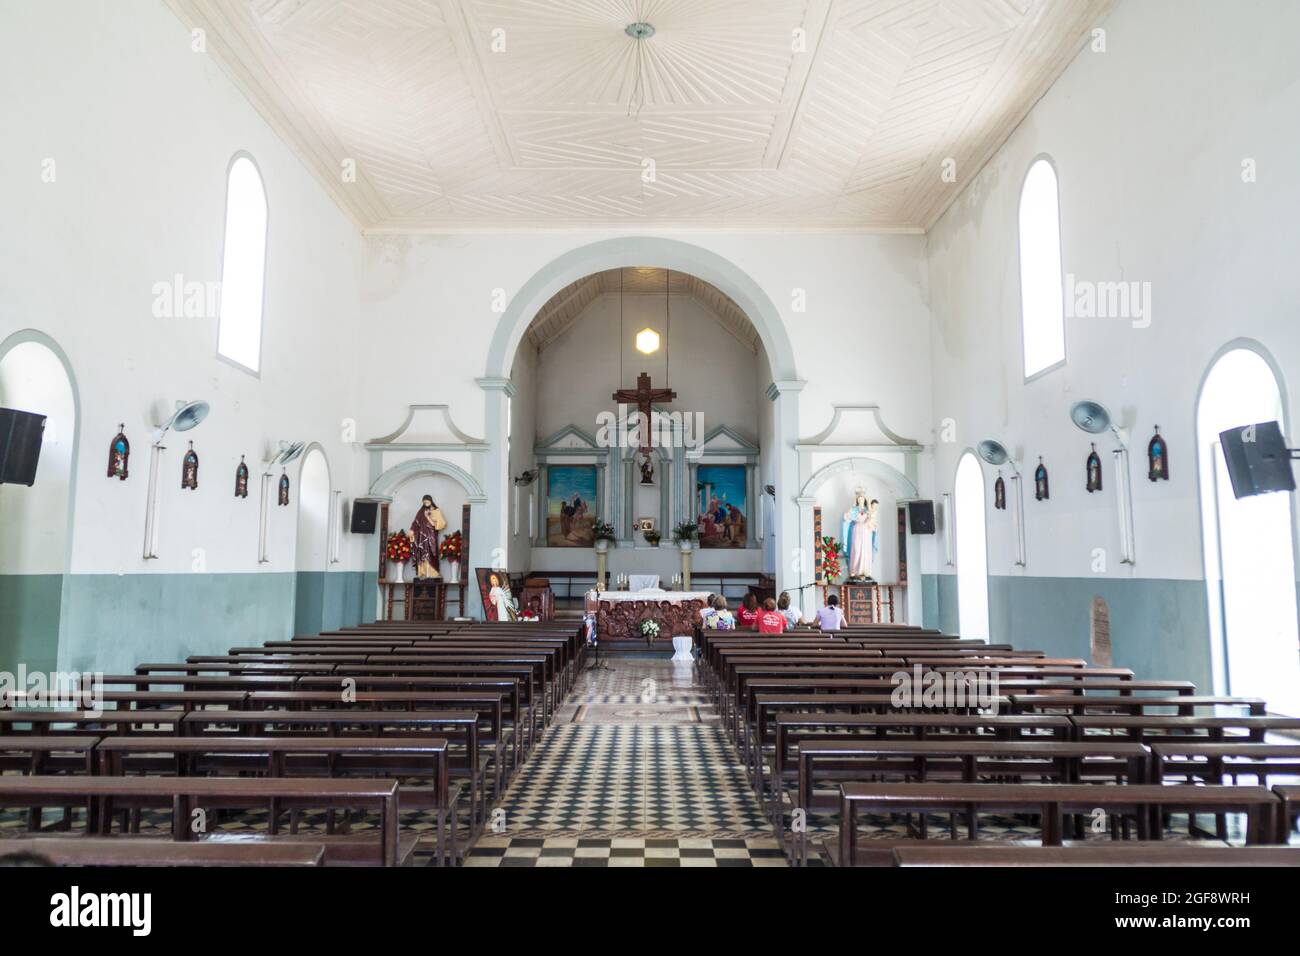 MACAPA, BRAZIL - JULY 31, 2015: Interior of Sao Jose (Saint Joseph) church in Macapa, Brazil Stock Photo